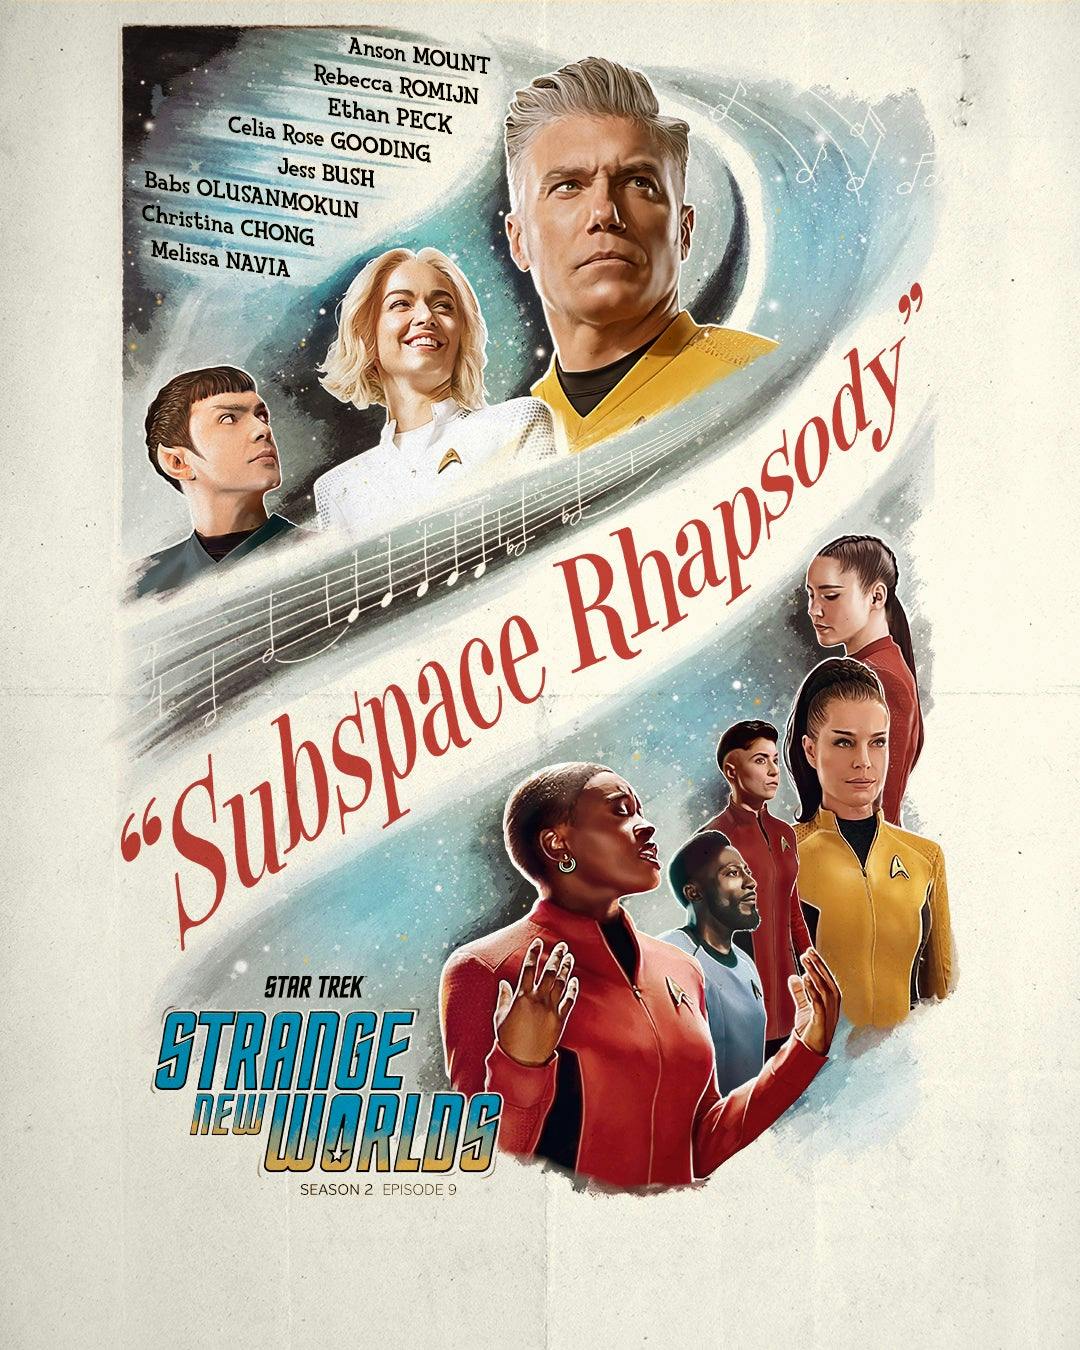 Star Trek: Strange New Worlds - Subspace Rhapsody Musical Poster